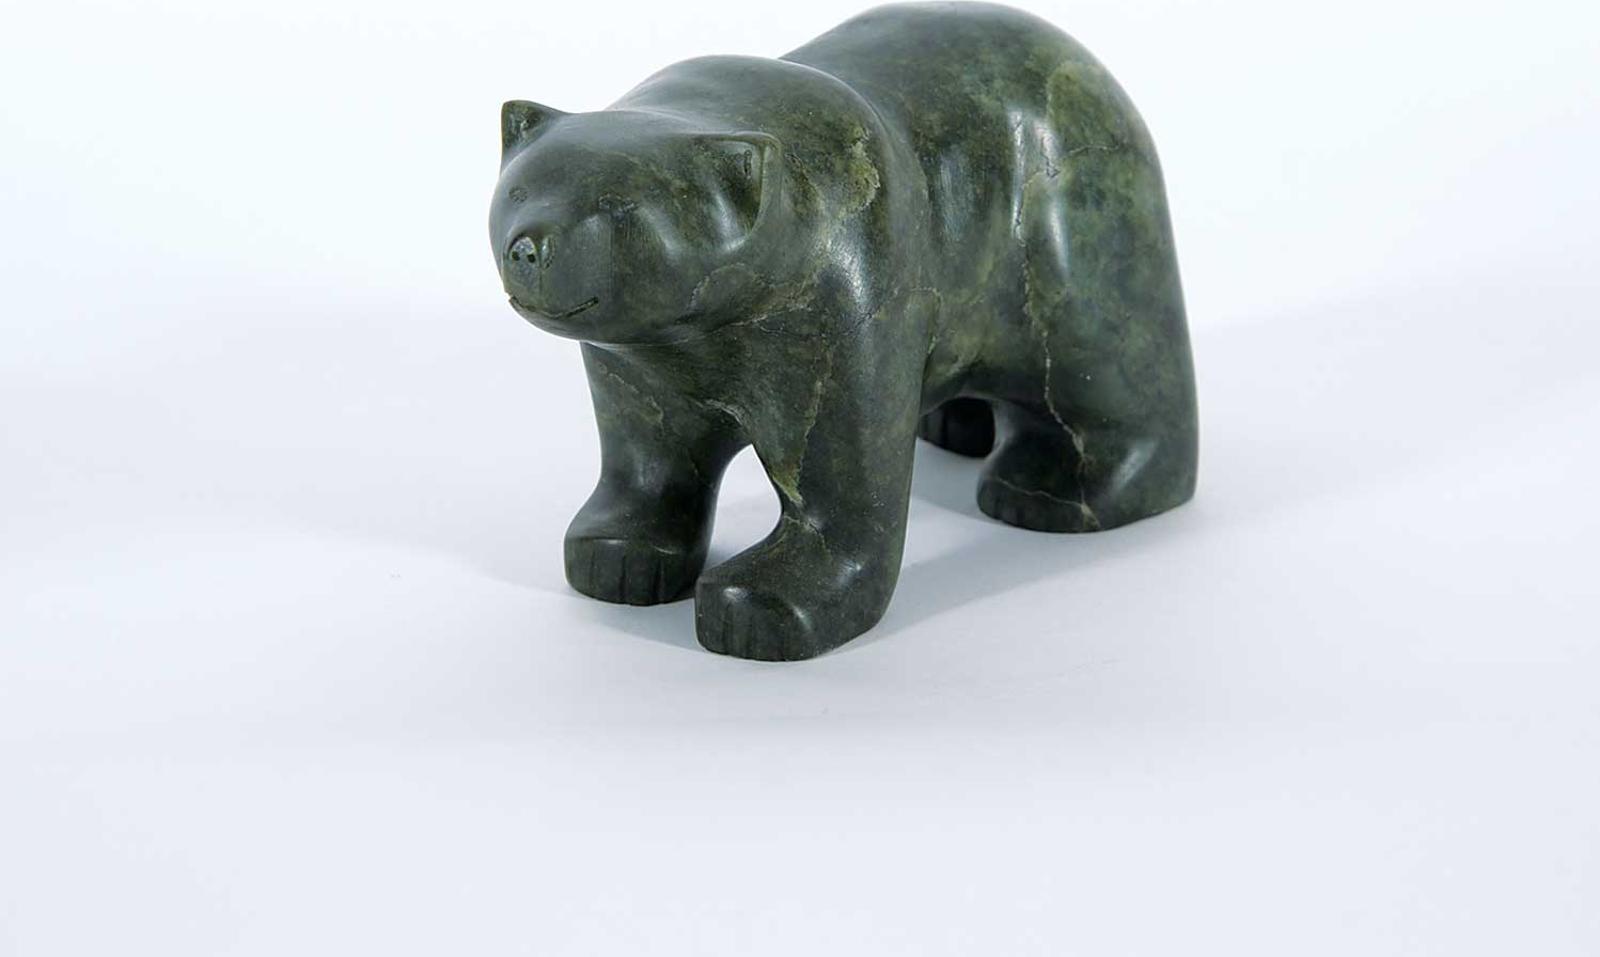 Clivelon Totan (1981-2018) - Untitled - Green Stone Bear